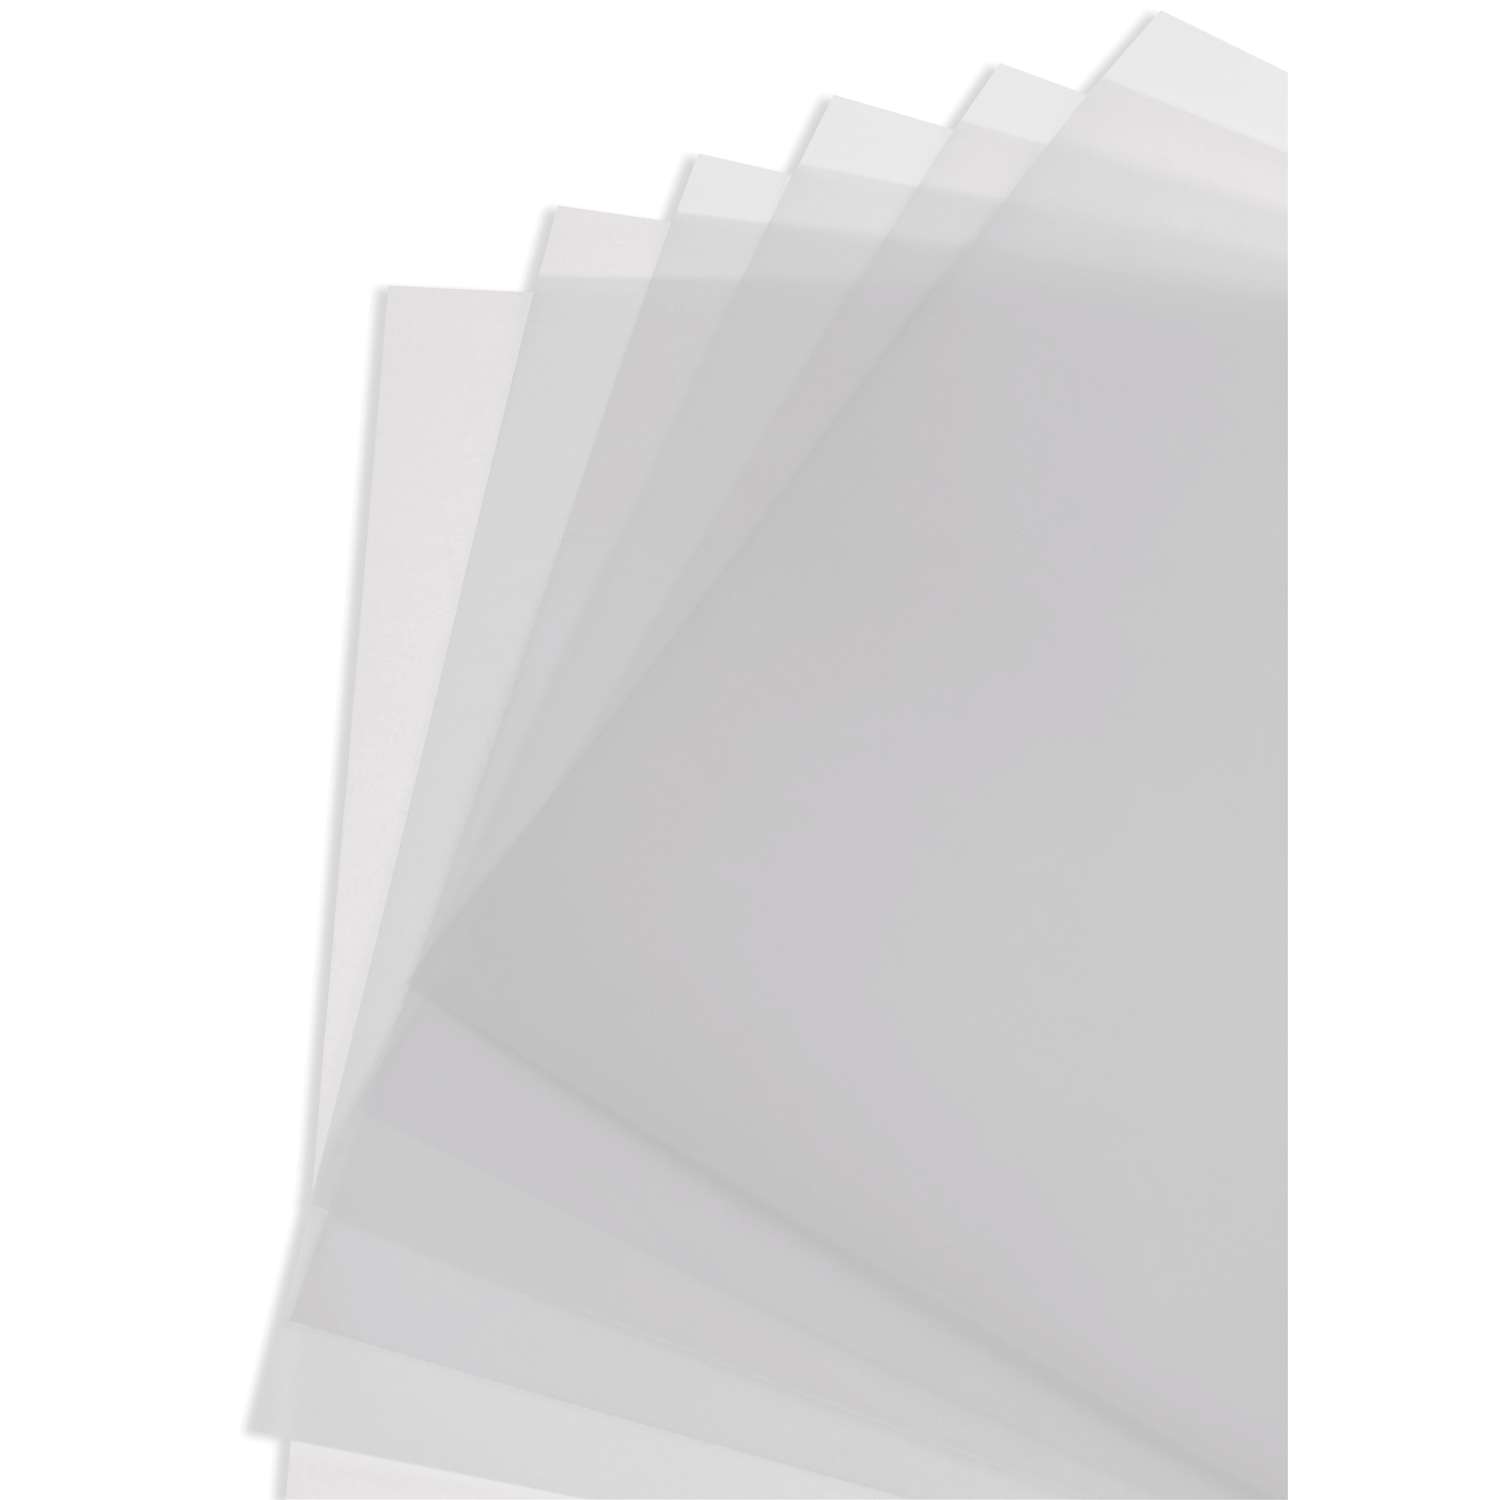 Netuno 100 Fogli di Carta Lucida Trasparente Bianca Formato A3 297 x 420 mm 160 g Golden Star Carta da Lucido Trasparente per Copie Trasparente Stampa Grafica Architettura Design Carta da ricalco 